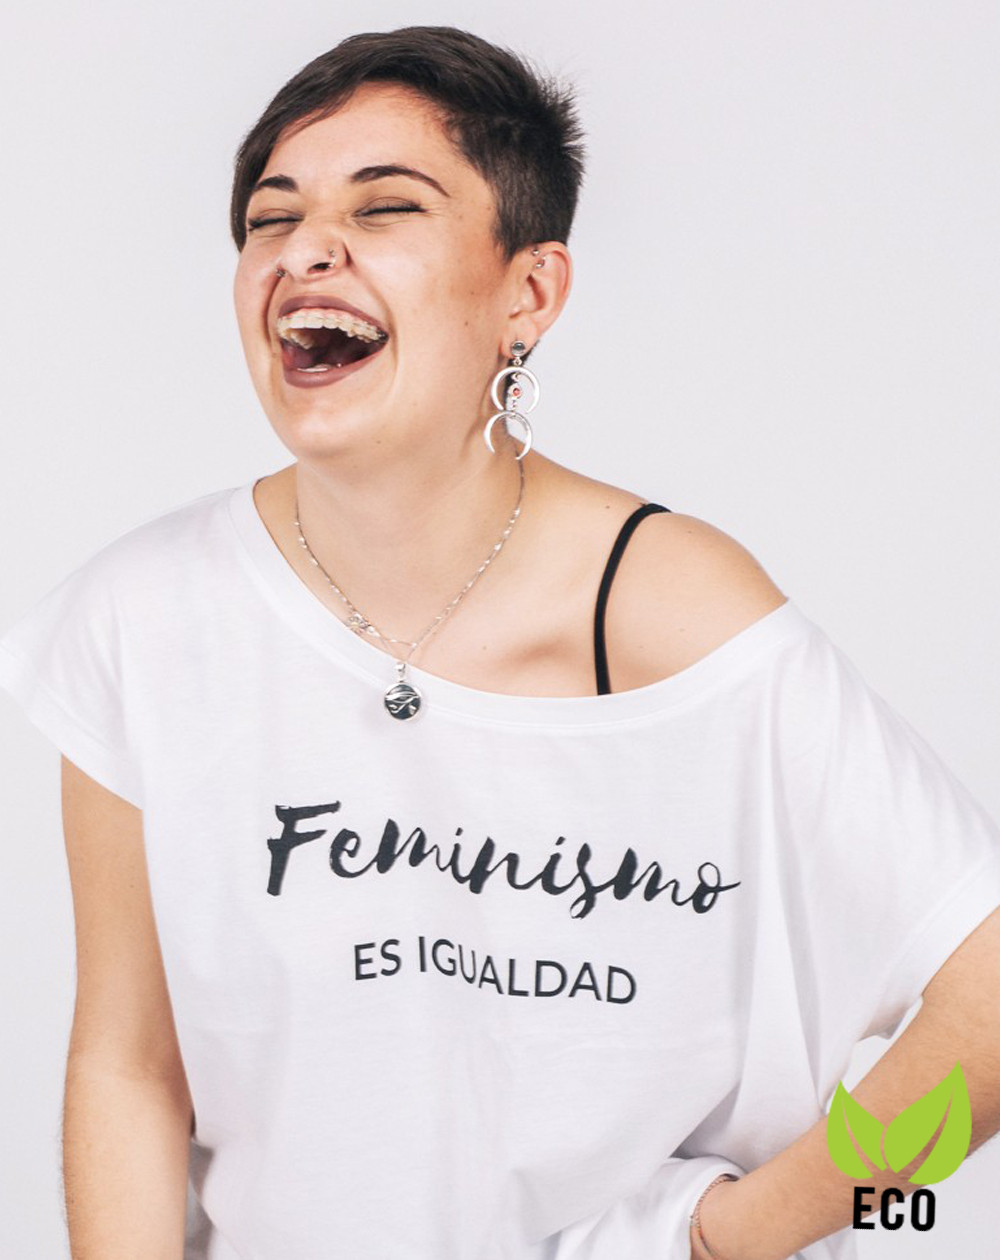 Camiseta feminismo Amnistía Internacional